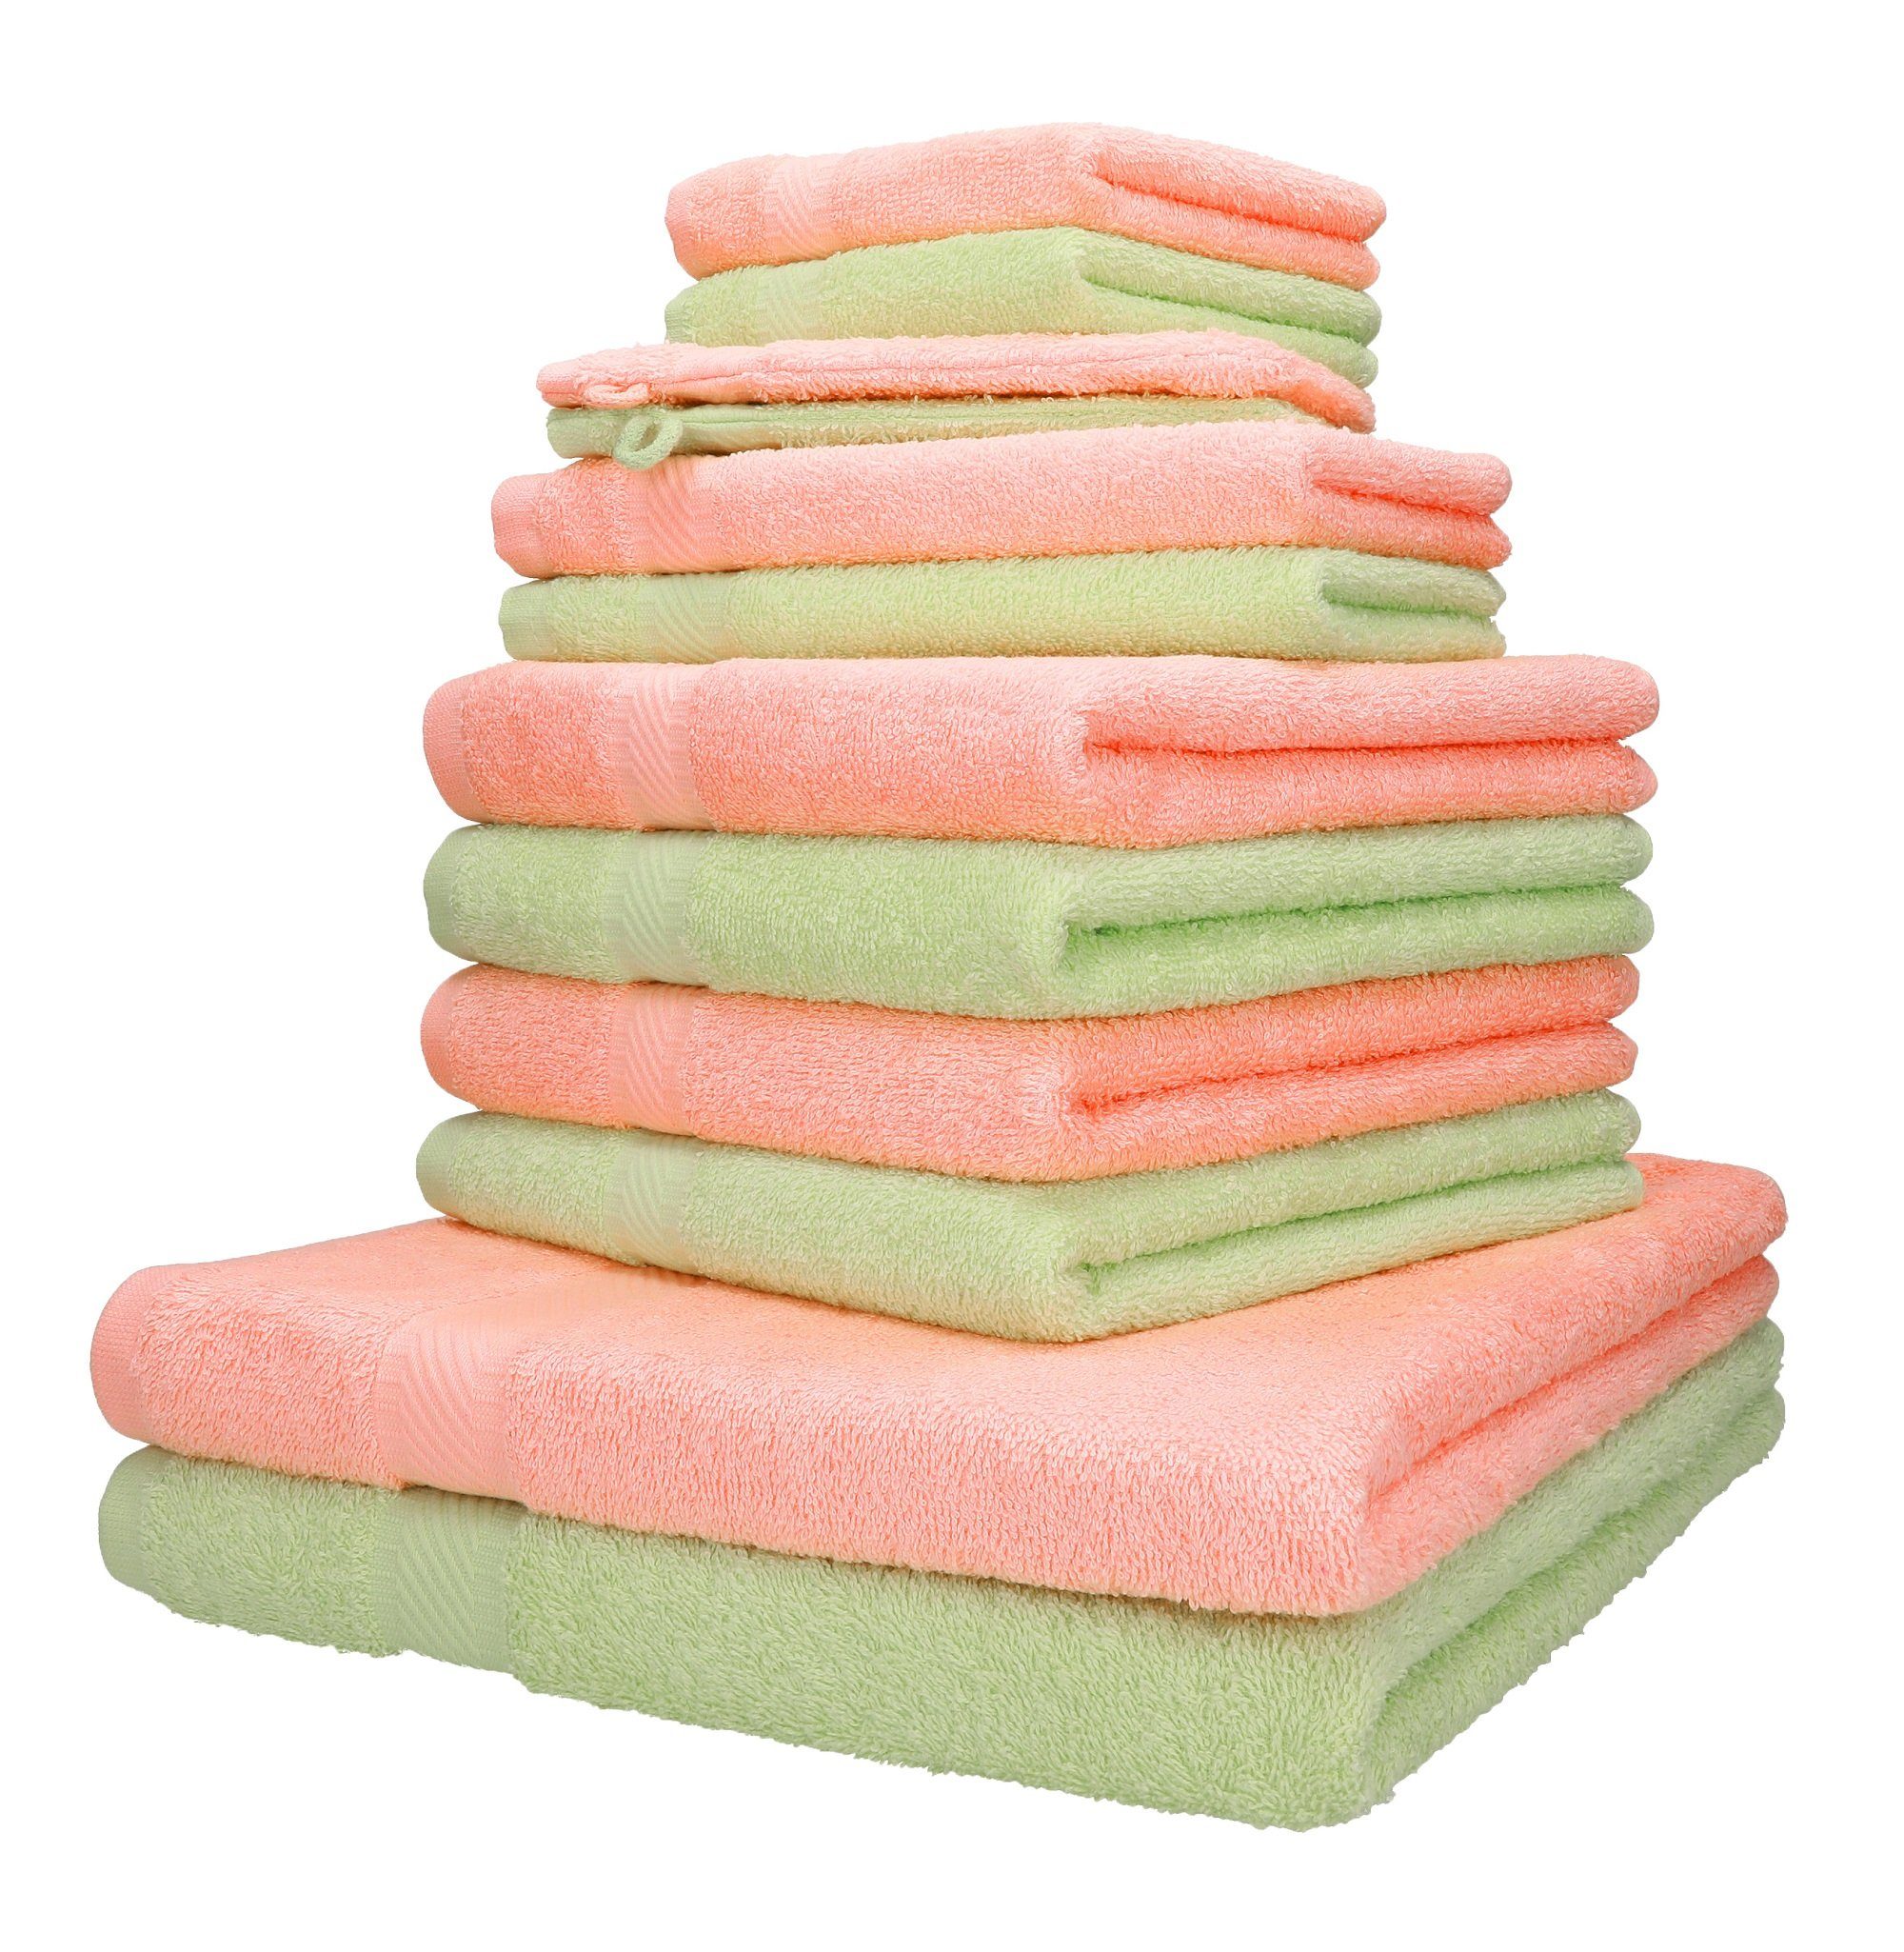 Betz Handtuch Set 12-TLG. Handtuch-Set Palermo 100% Baumwolle 2 Liegetücher  4 Handtücher 2 Gästetücher 2 Seiftücher 2 Waschhandschuhe Farbe apricot und  grün, 100% Baumwolle, (12-tlg) | Handtuch-Sets